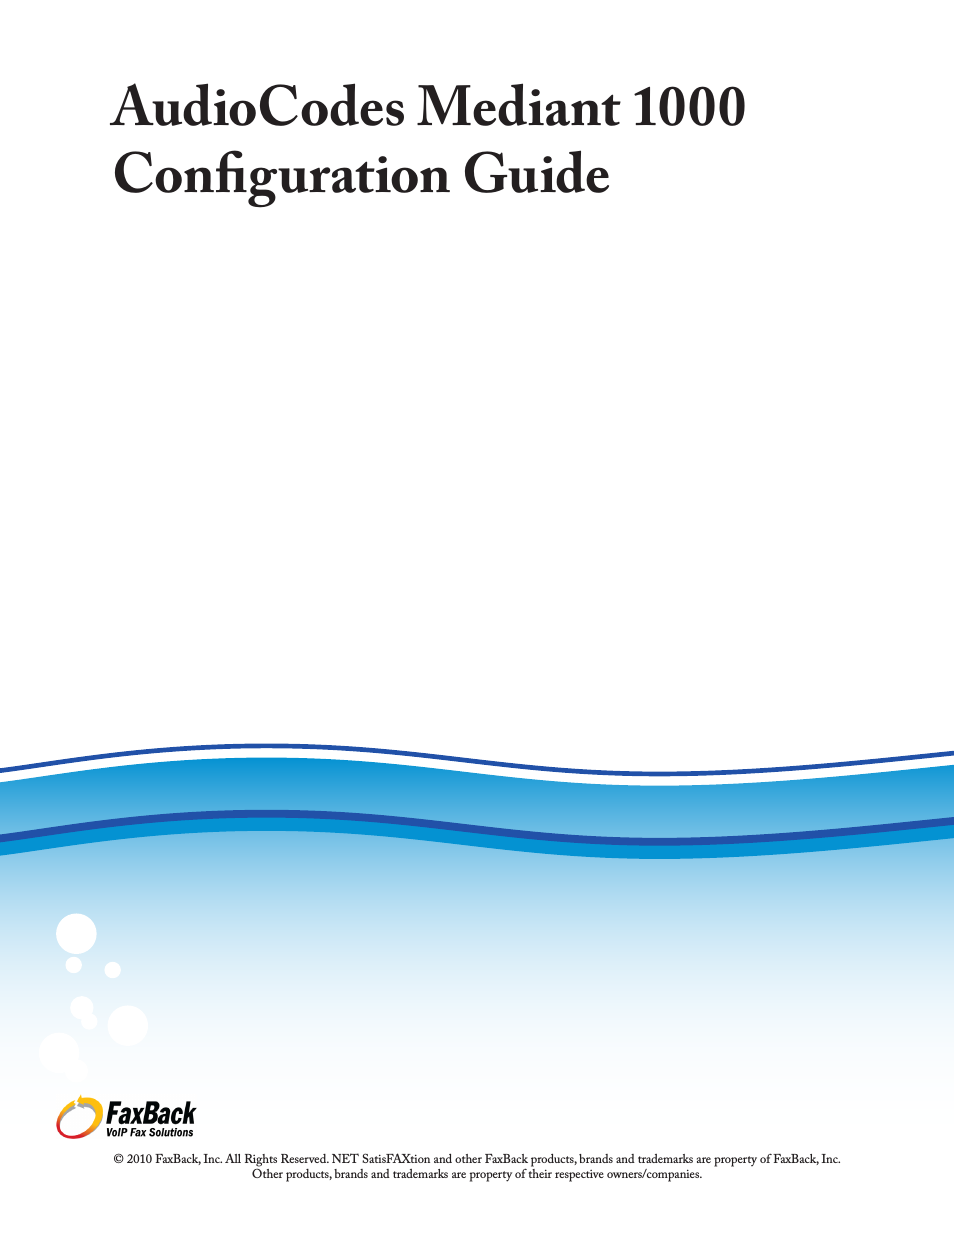 AudioCodes Mediant 1000 - Configuration Guide